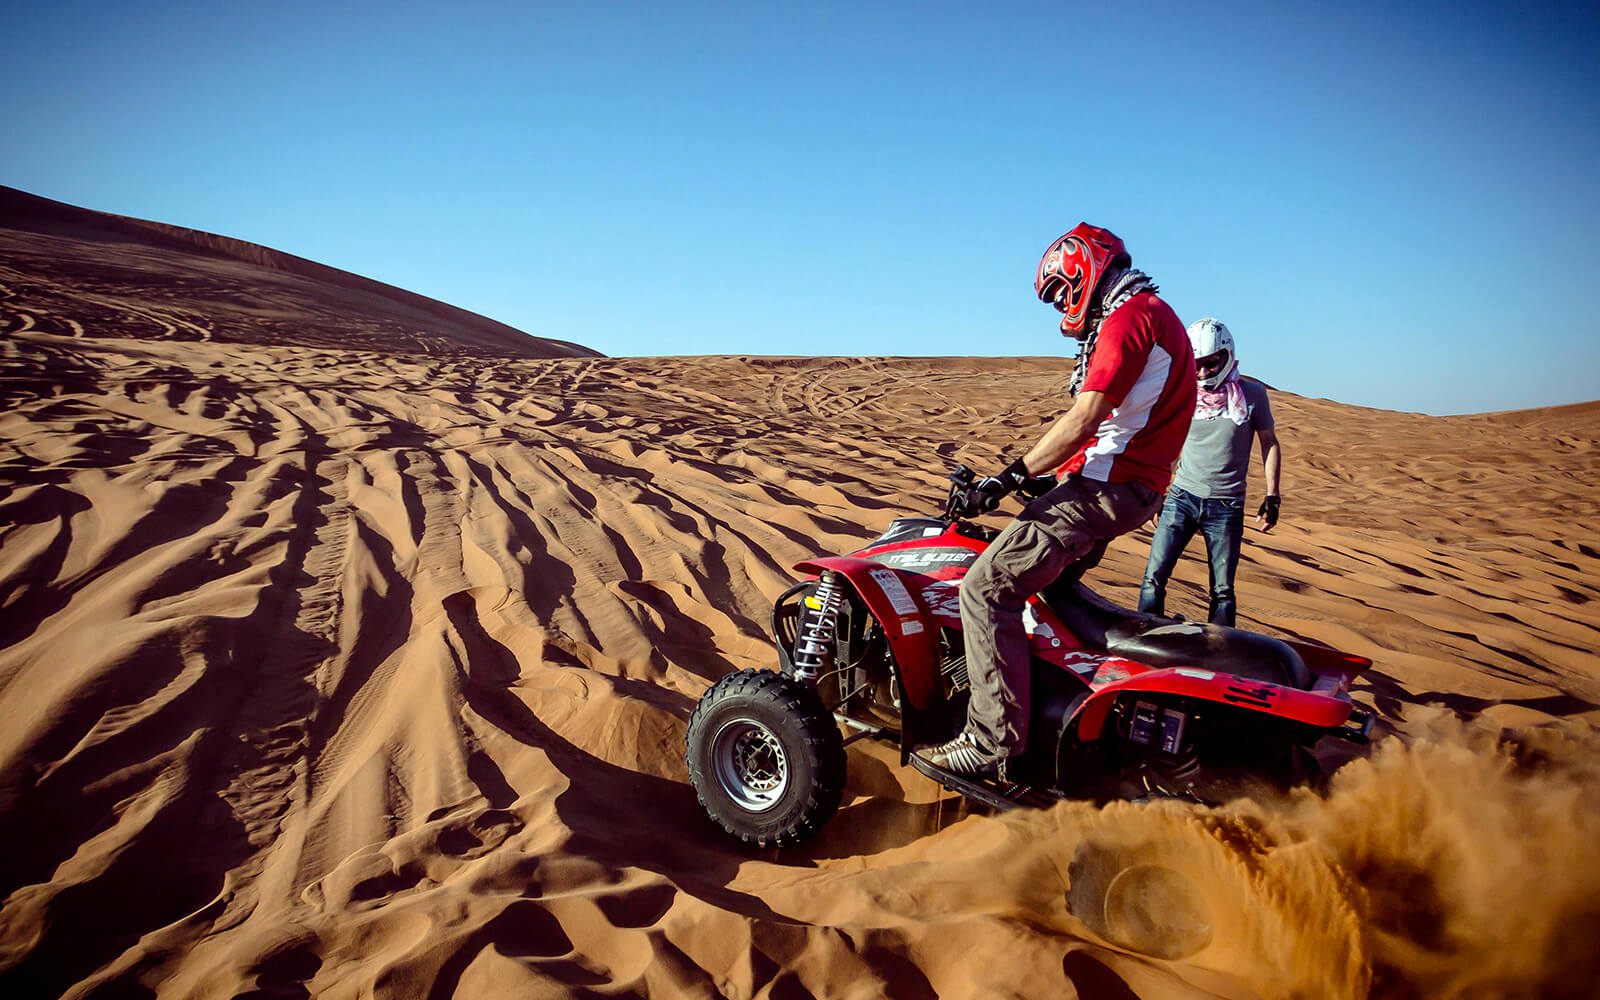 Sahara Desert Tour - Activities - Quad Biking - Quad Bike